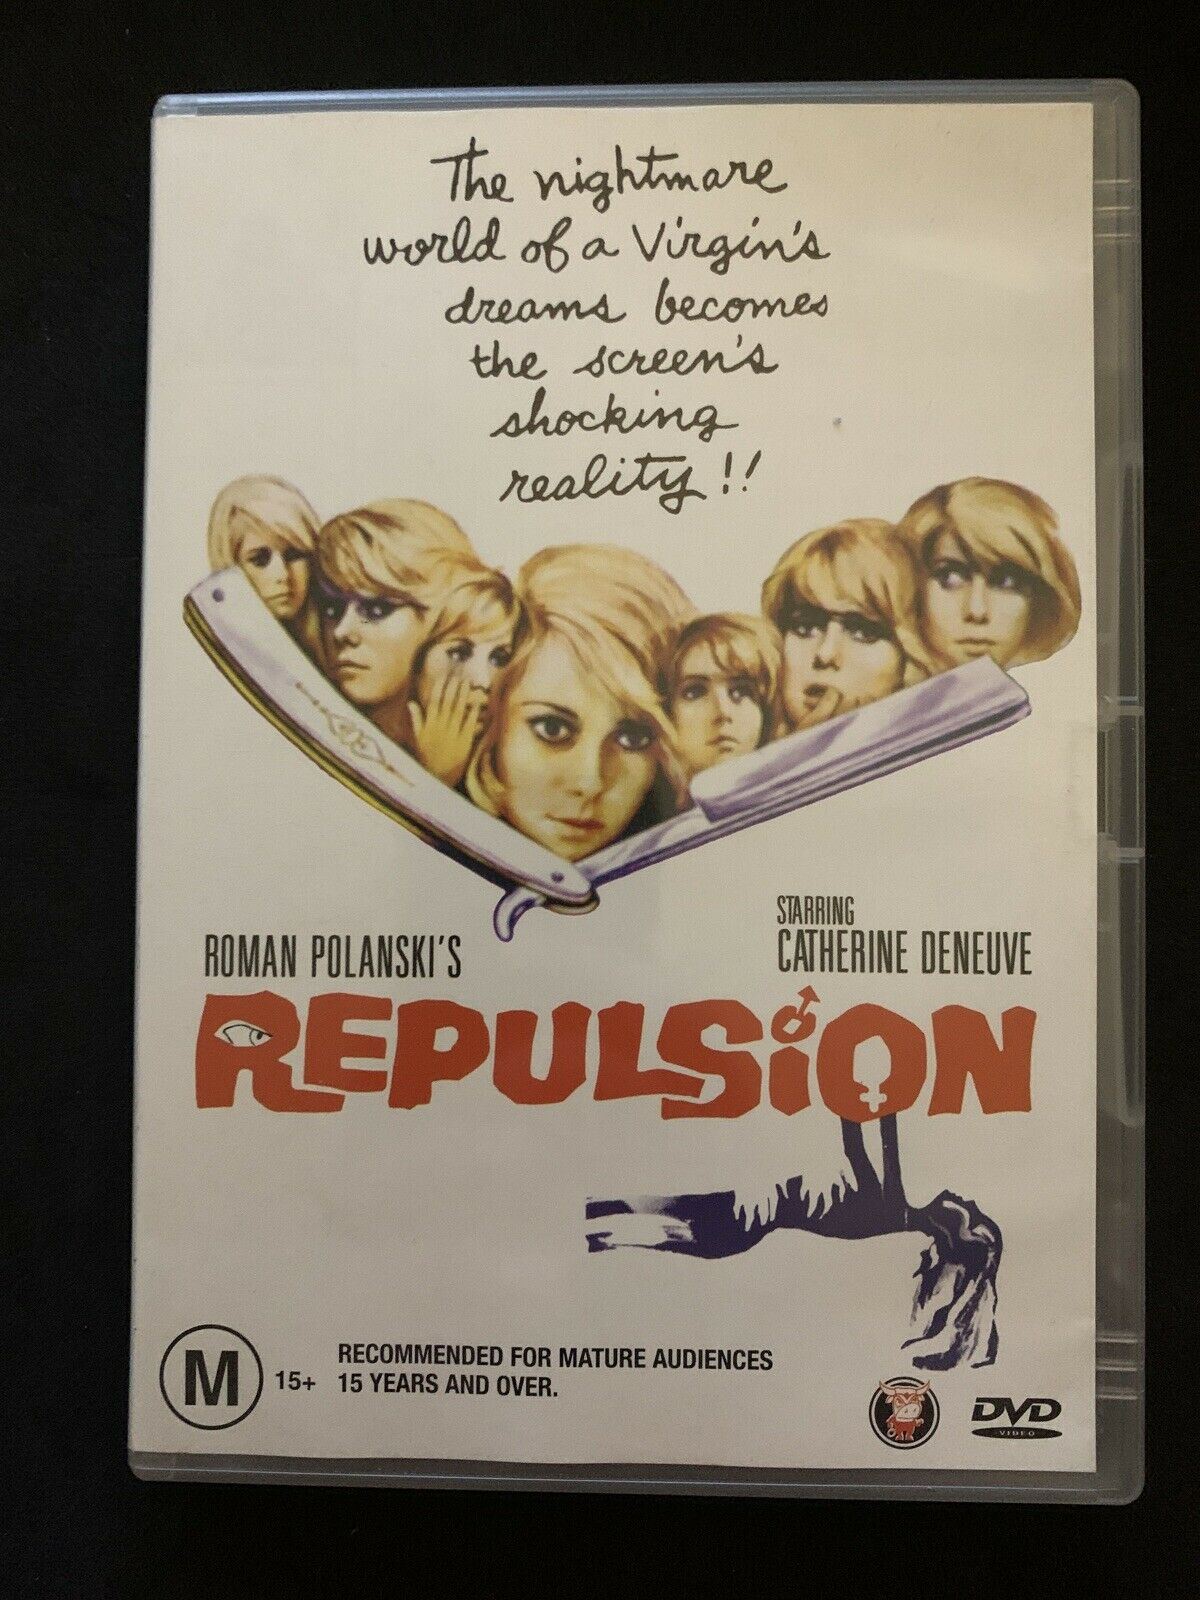 Repulsion (DVD, 1965) Roman Polanski, Catherine Deneuve, Ian Hendry. Region 4